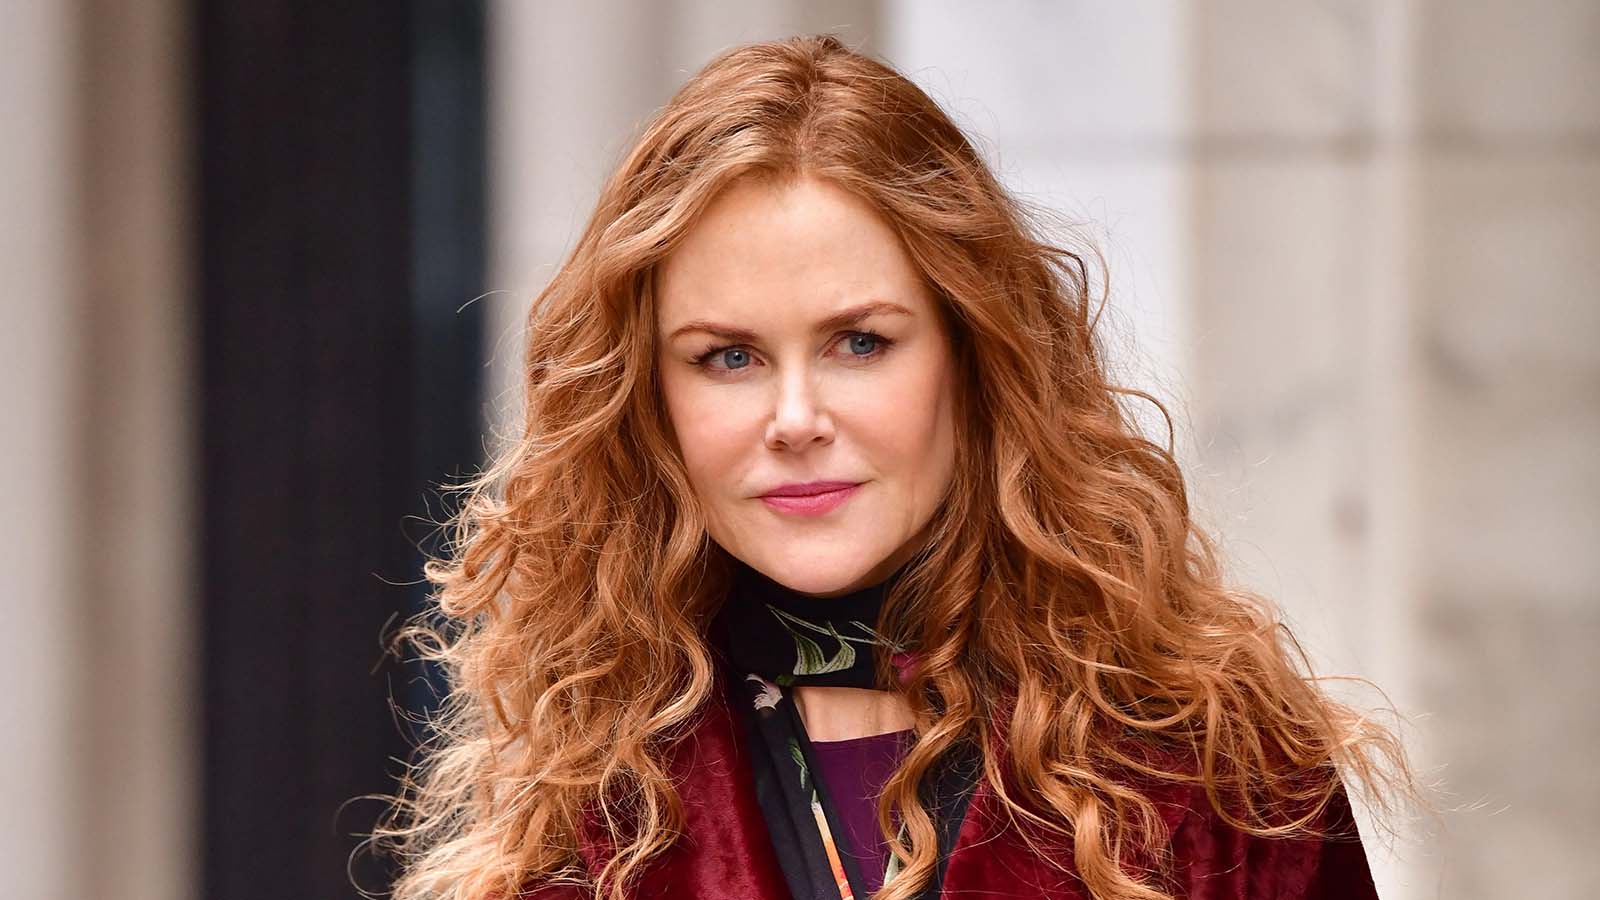 Nicole Kidman is one smart celebrity gambler